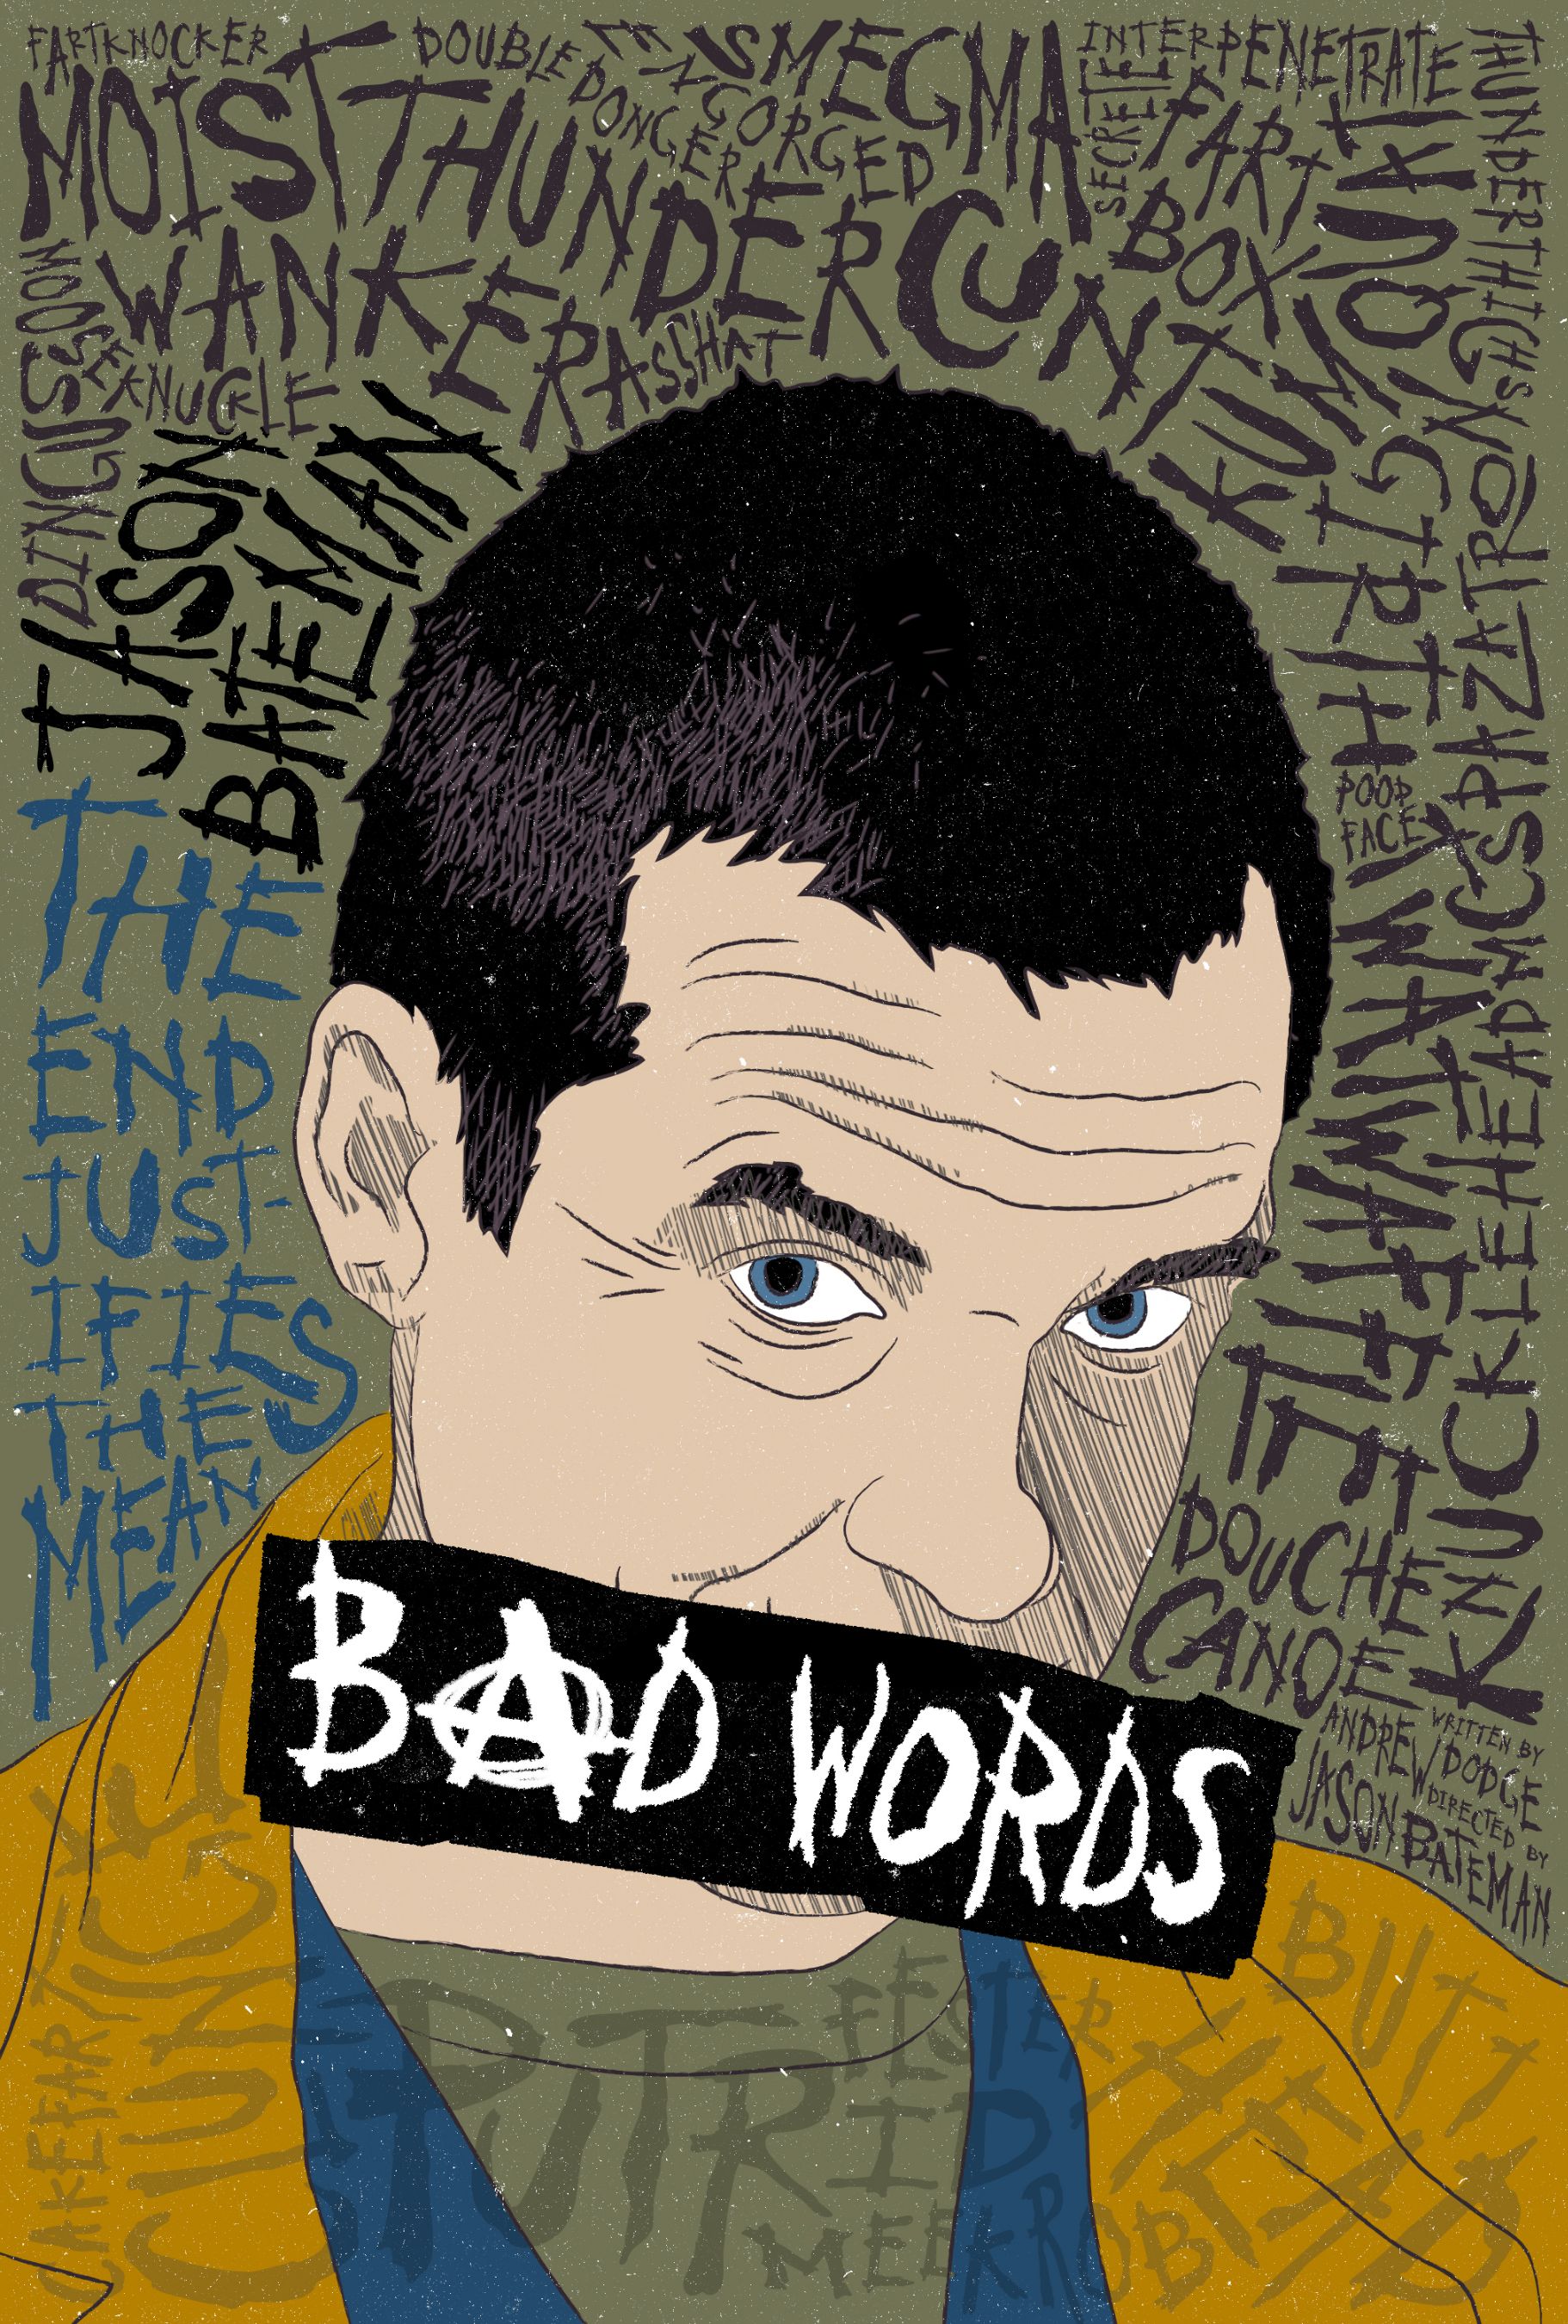 Reddit Inspired Poster for Bad Words Movie